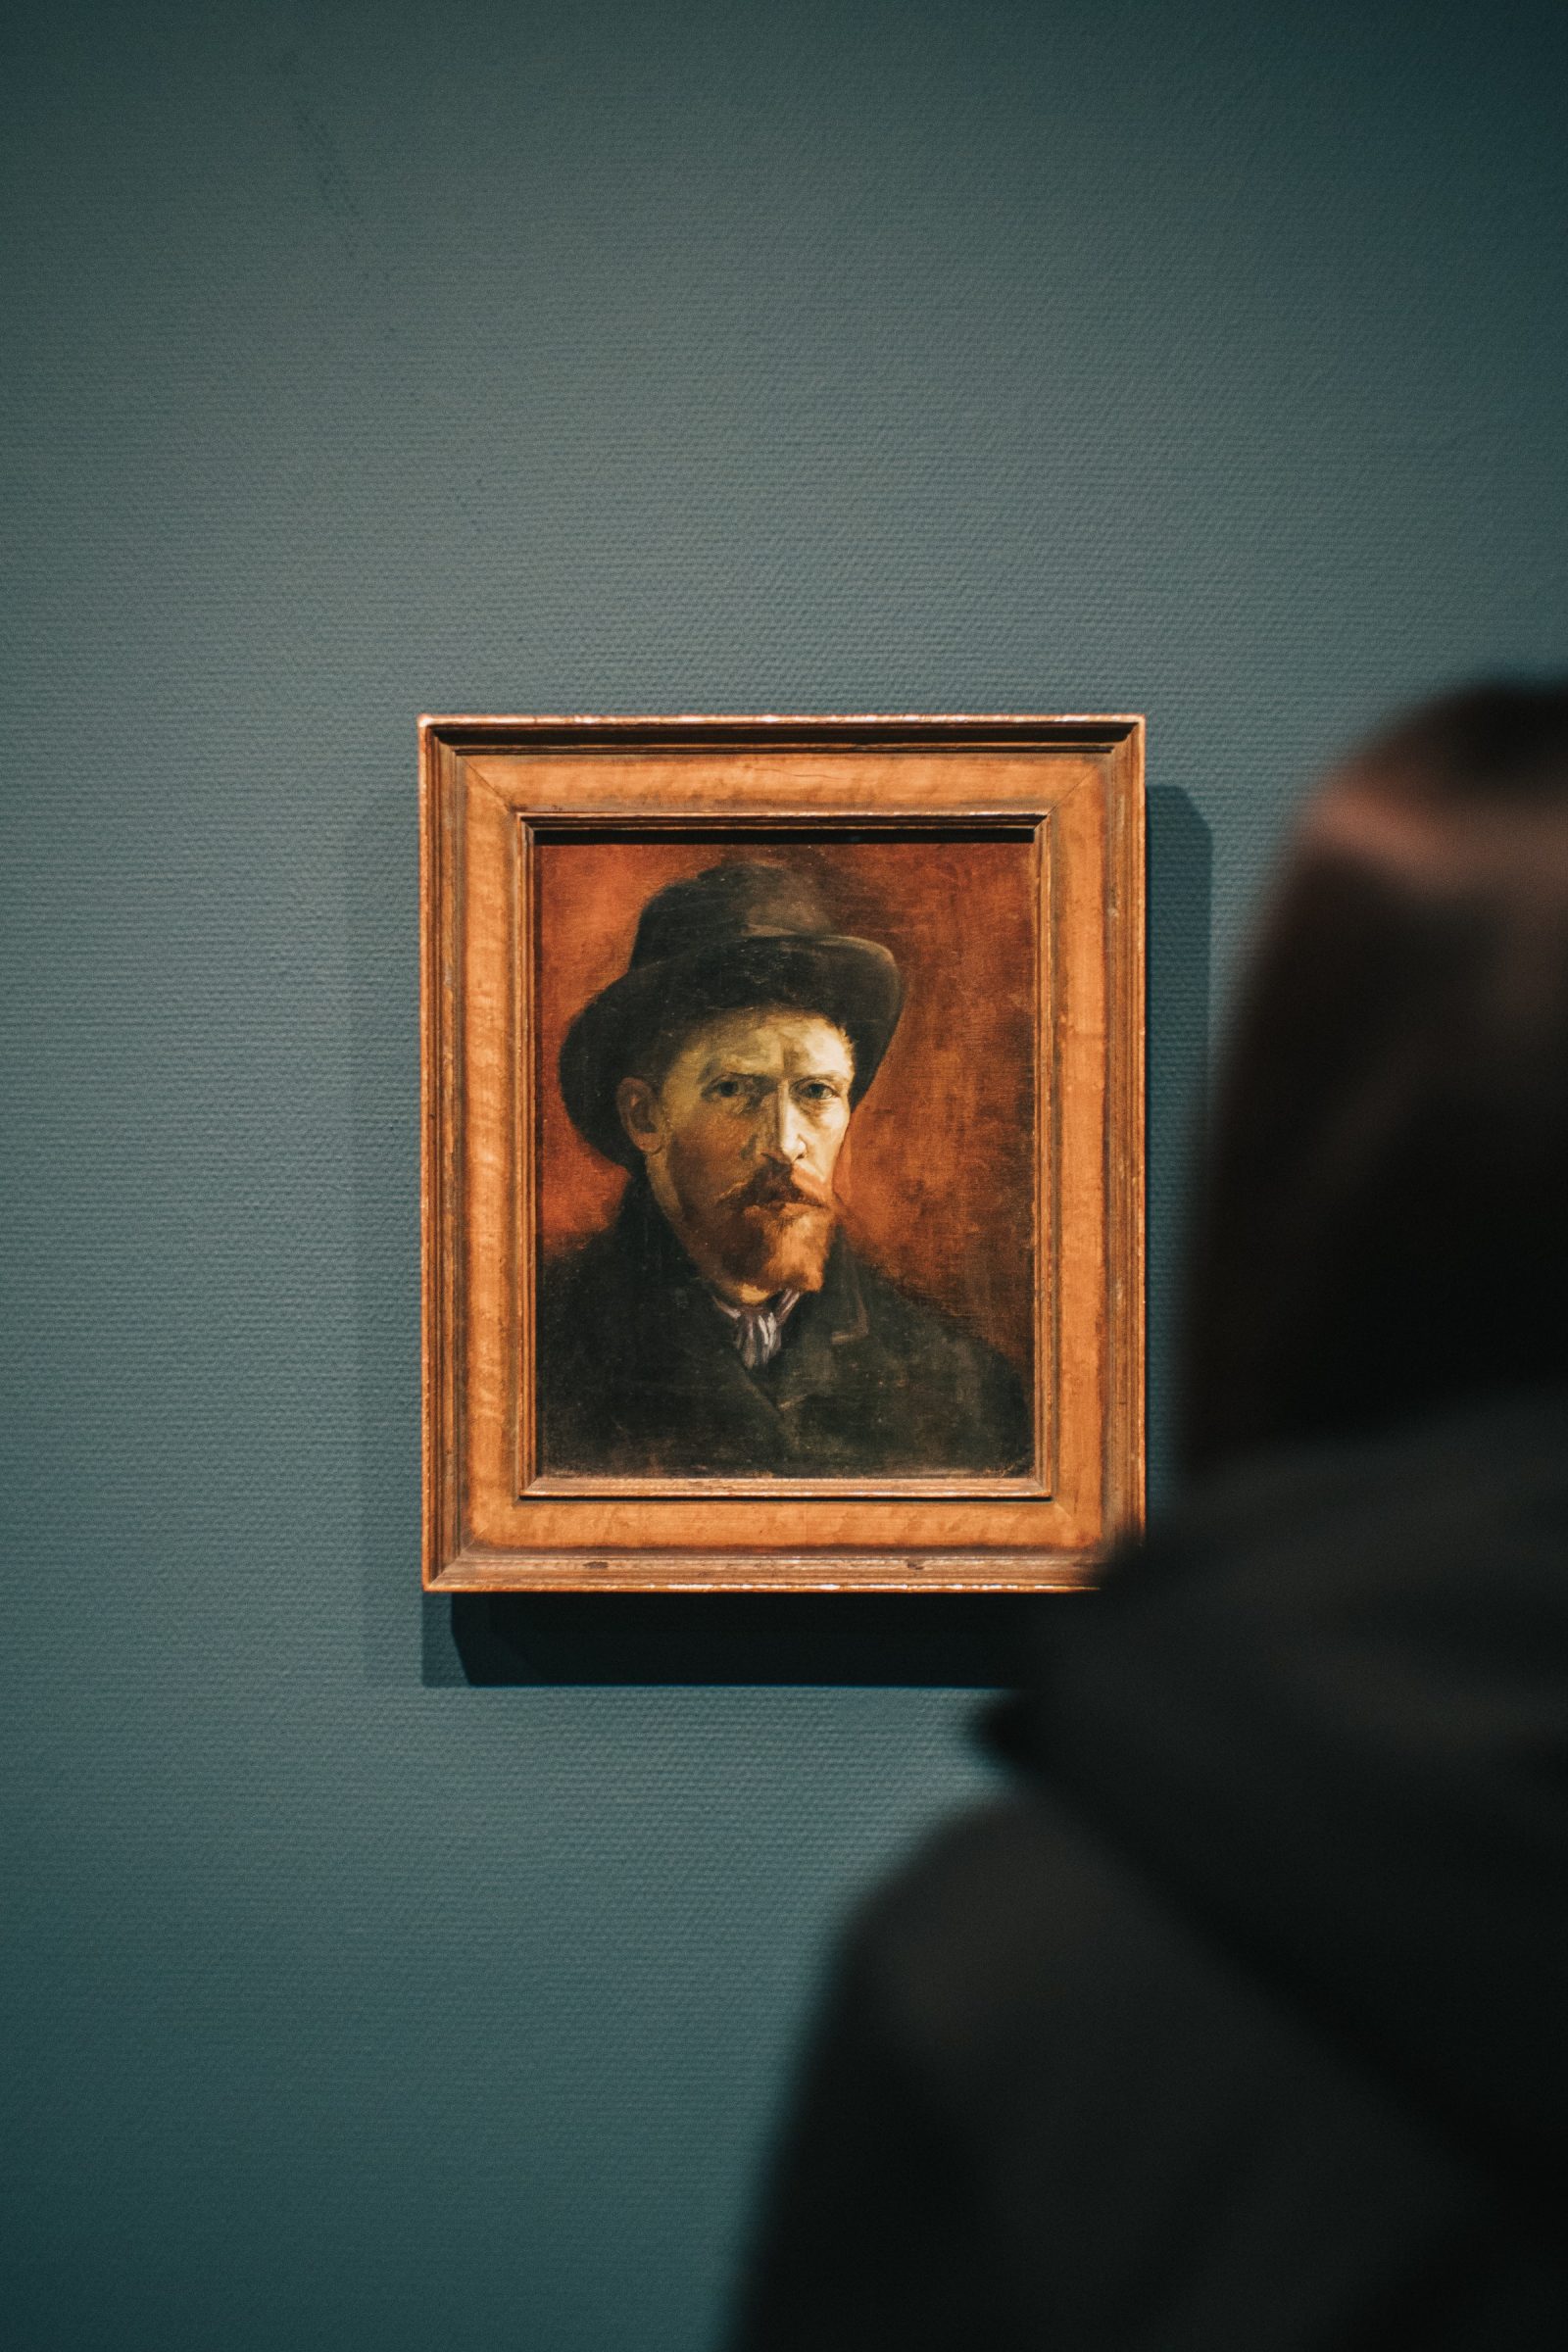 Van Gogh Museum | Amsterdam